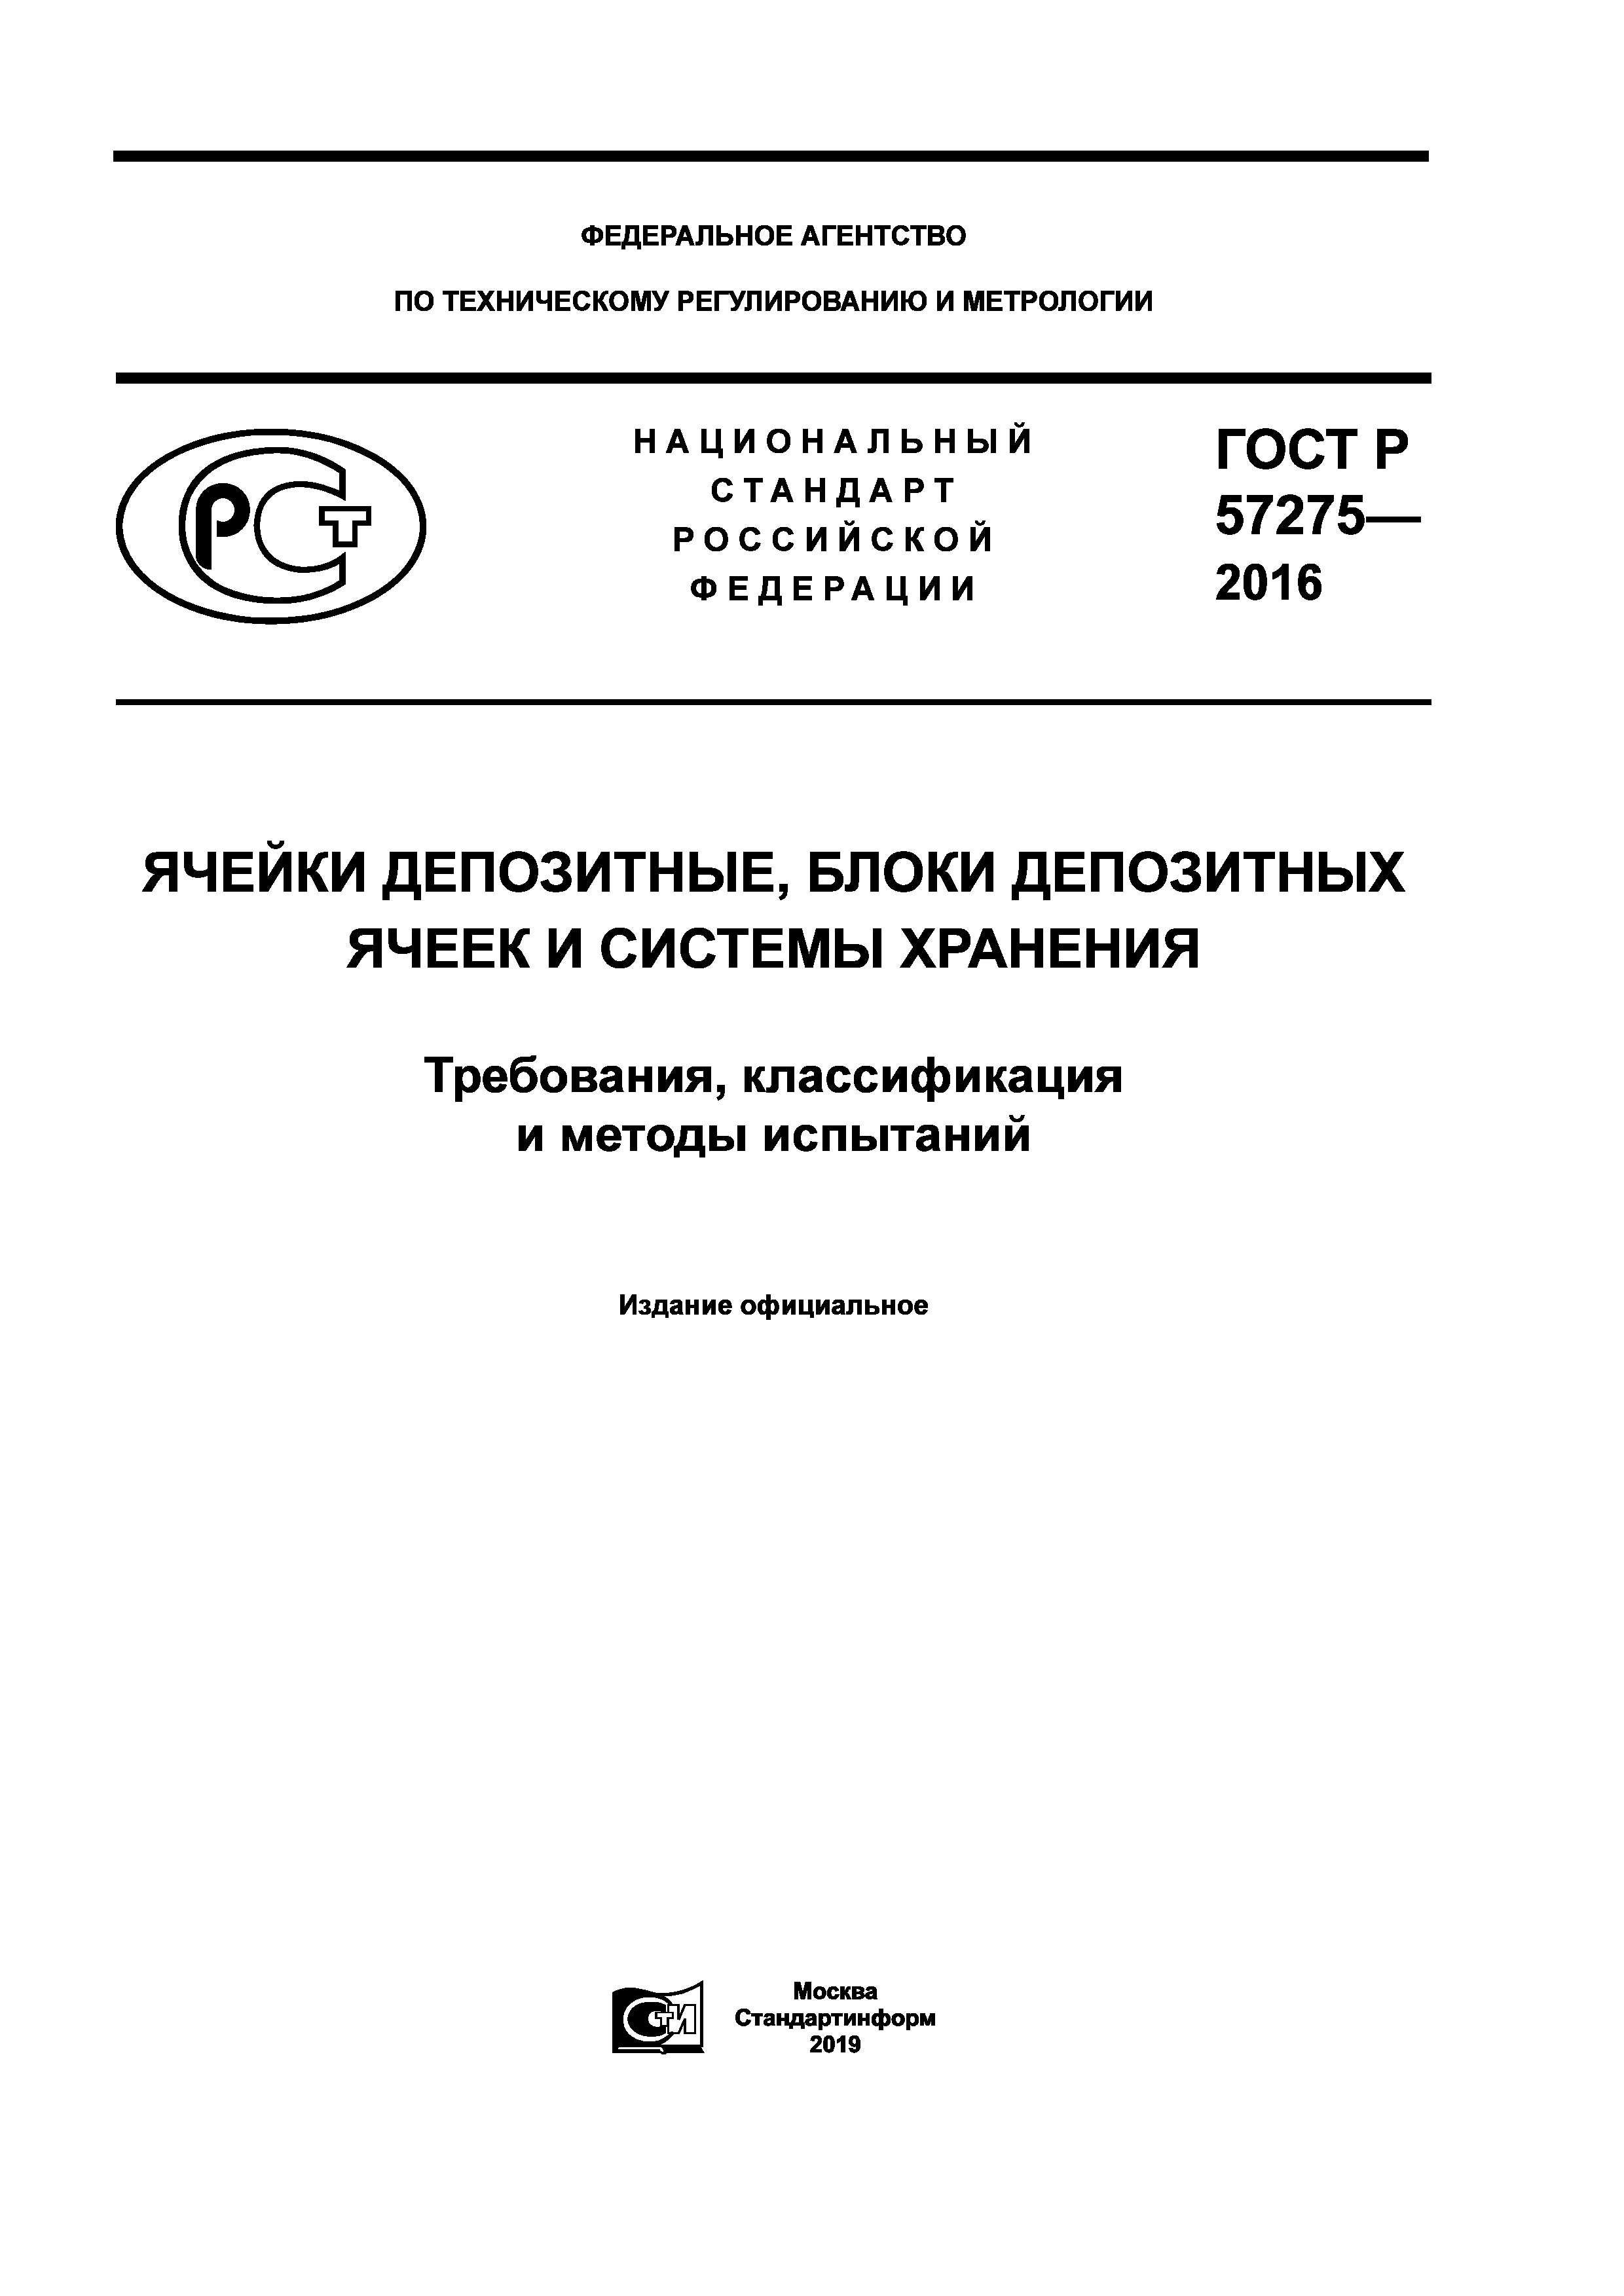 ГОСТ Р 57275-2016